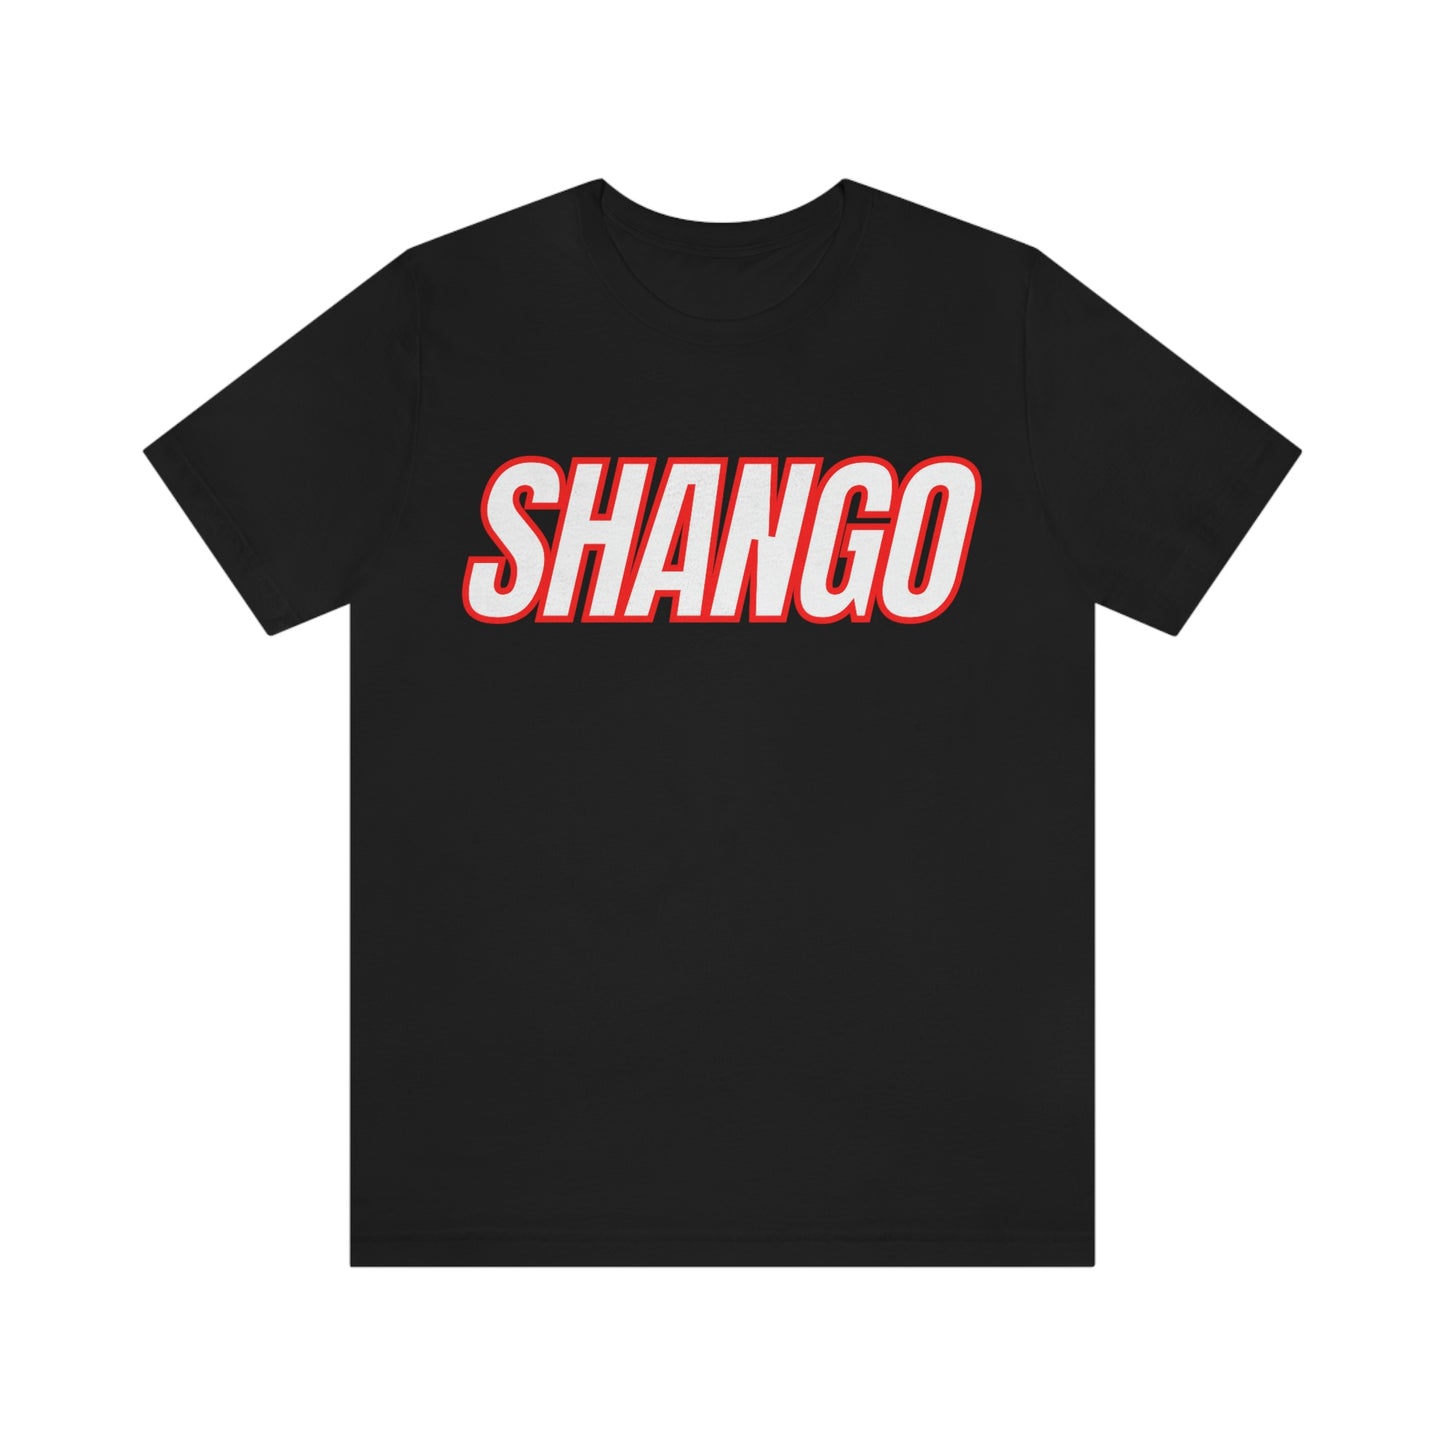 SHANGO / CHANGO ORISHA Unisex T-shirt